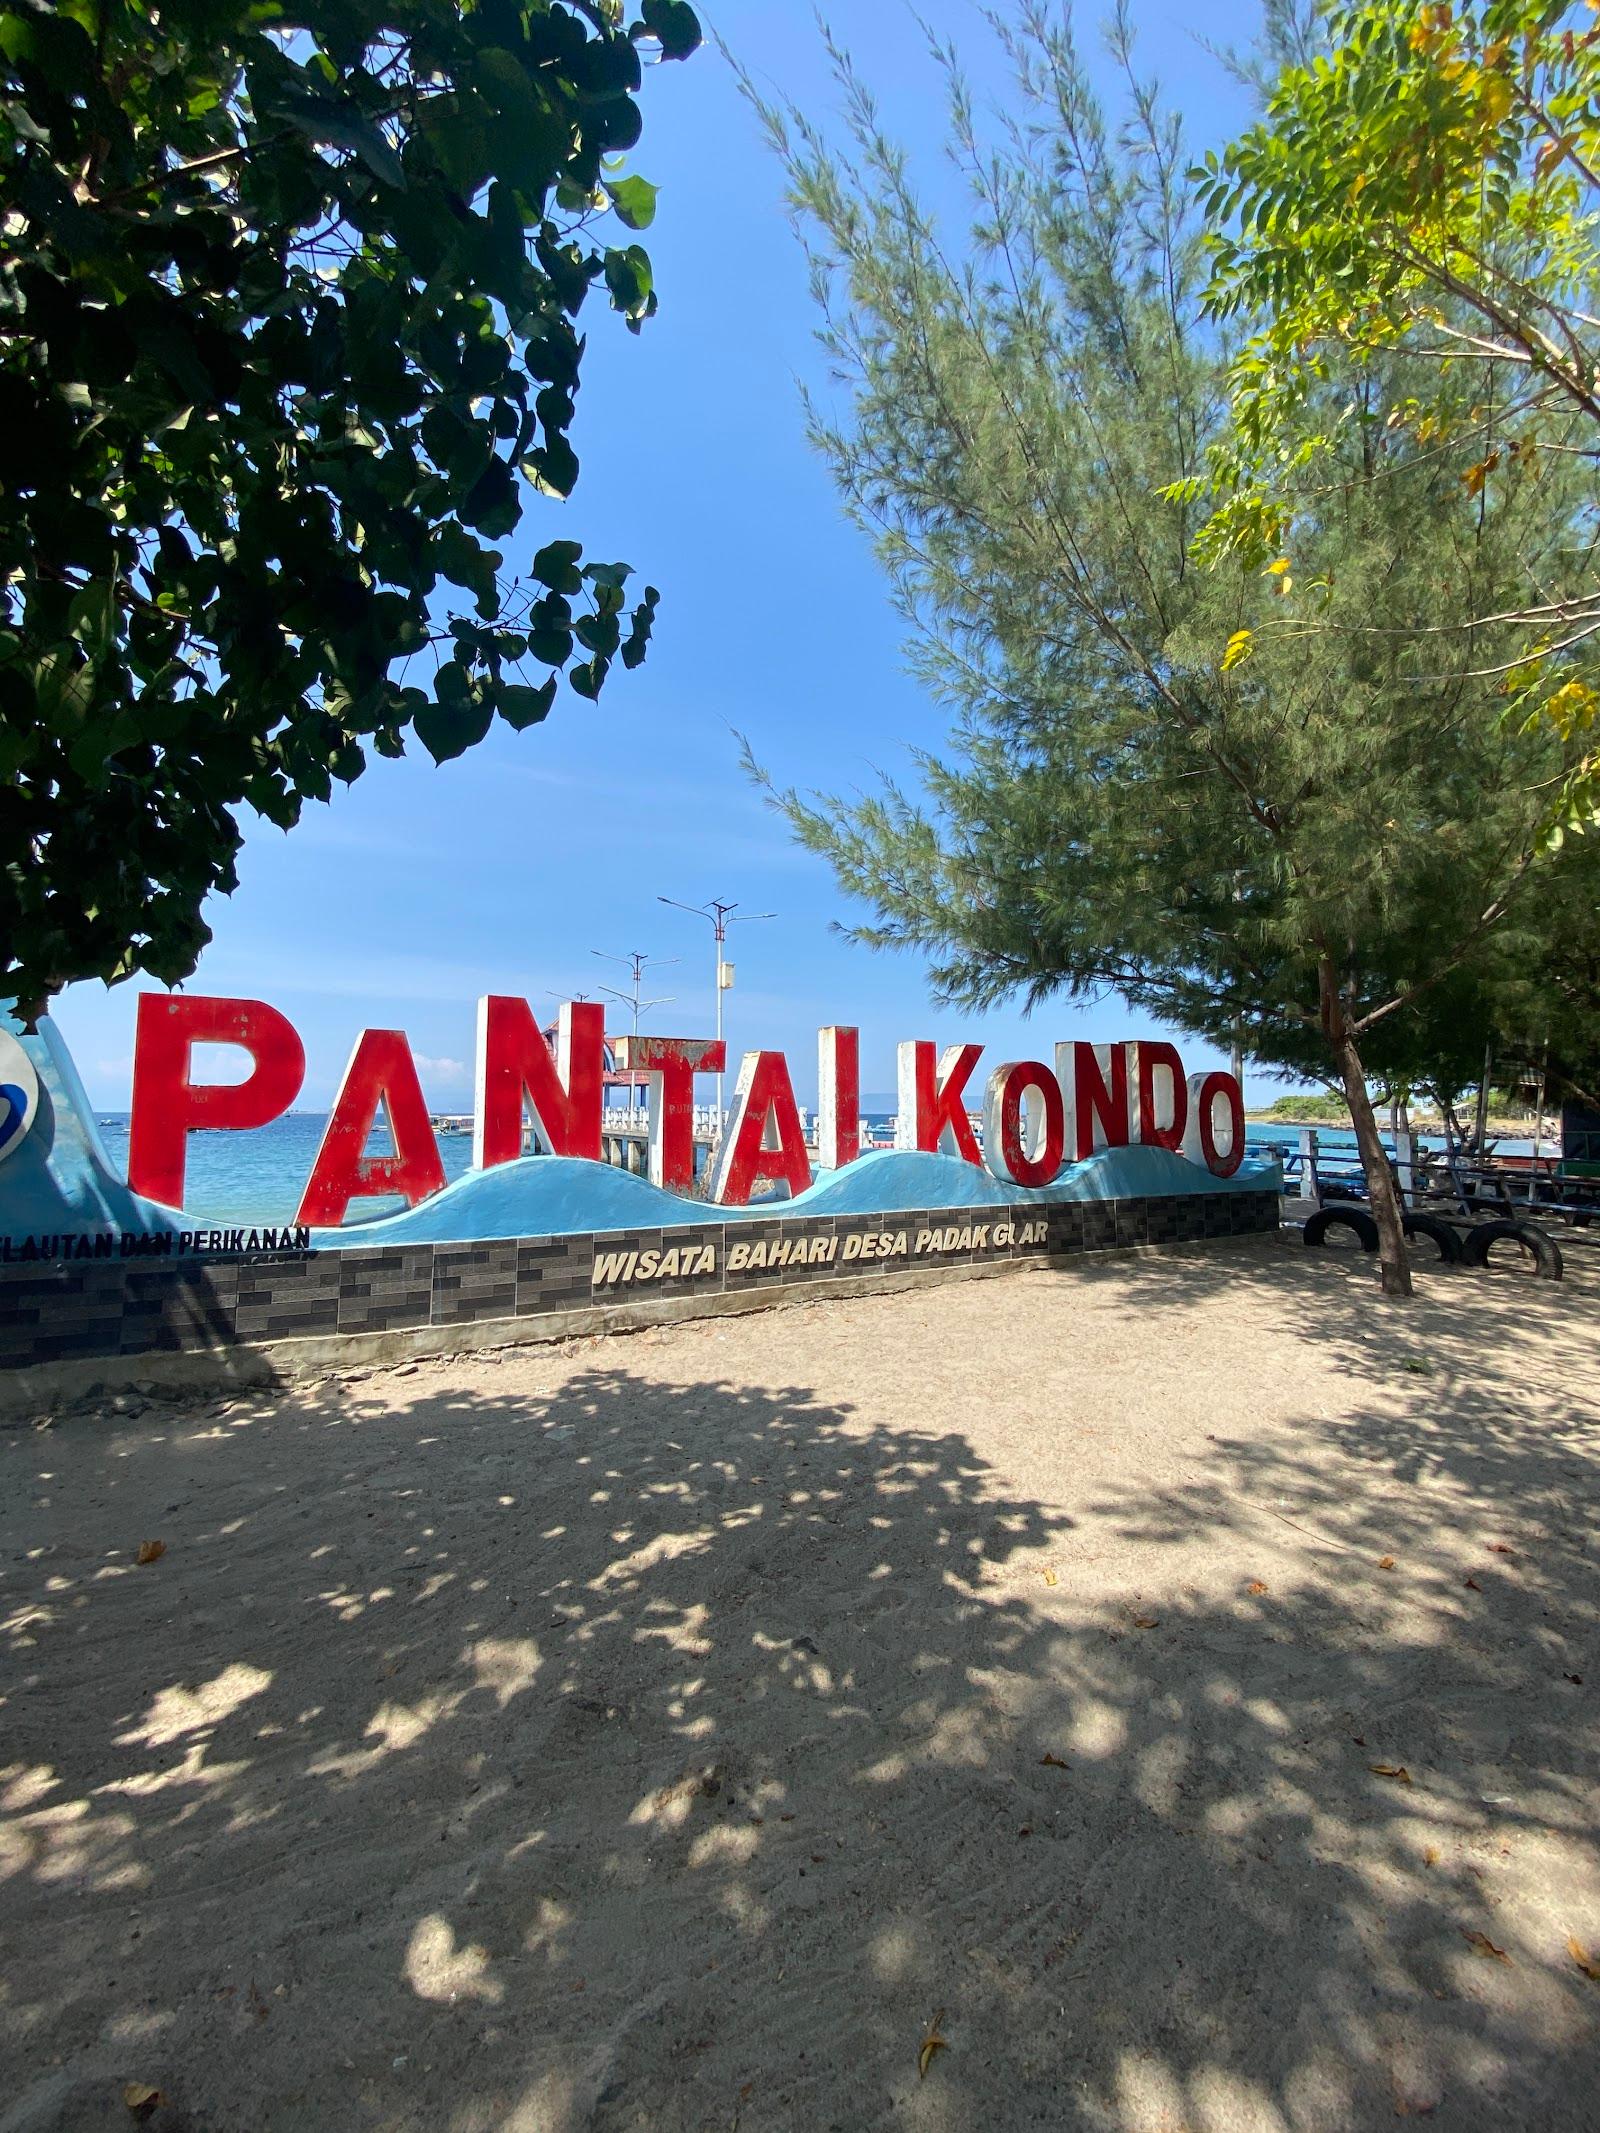 Sandee Pulau Kondo Beach Photo